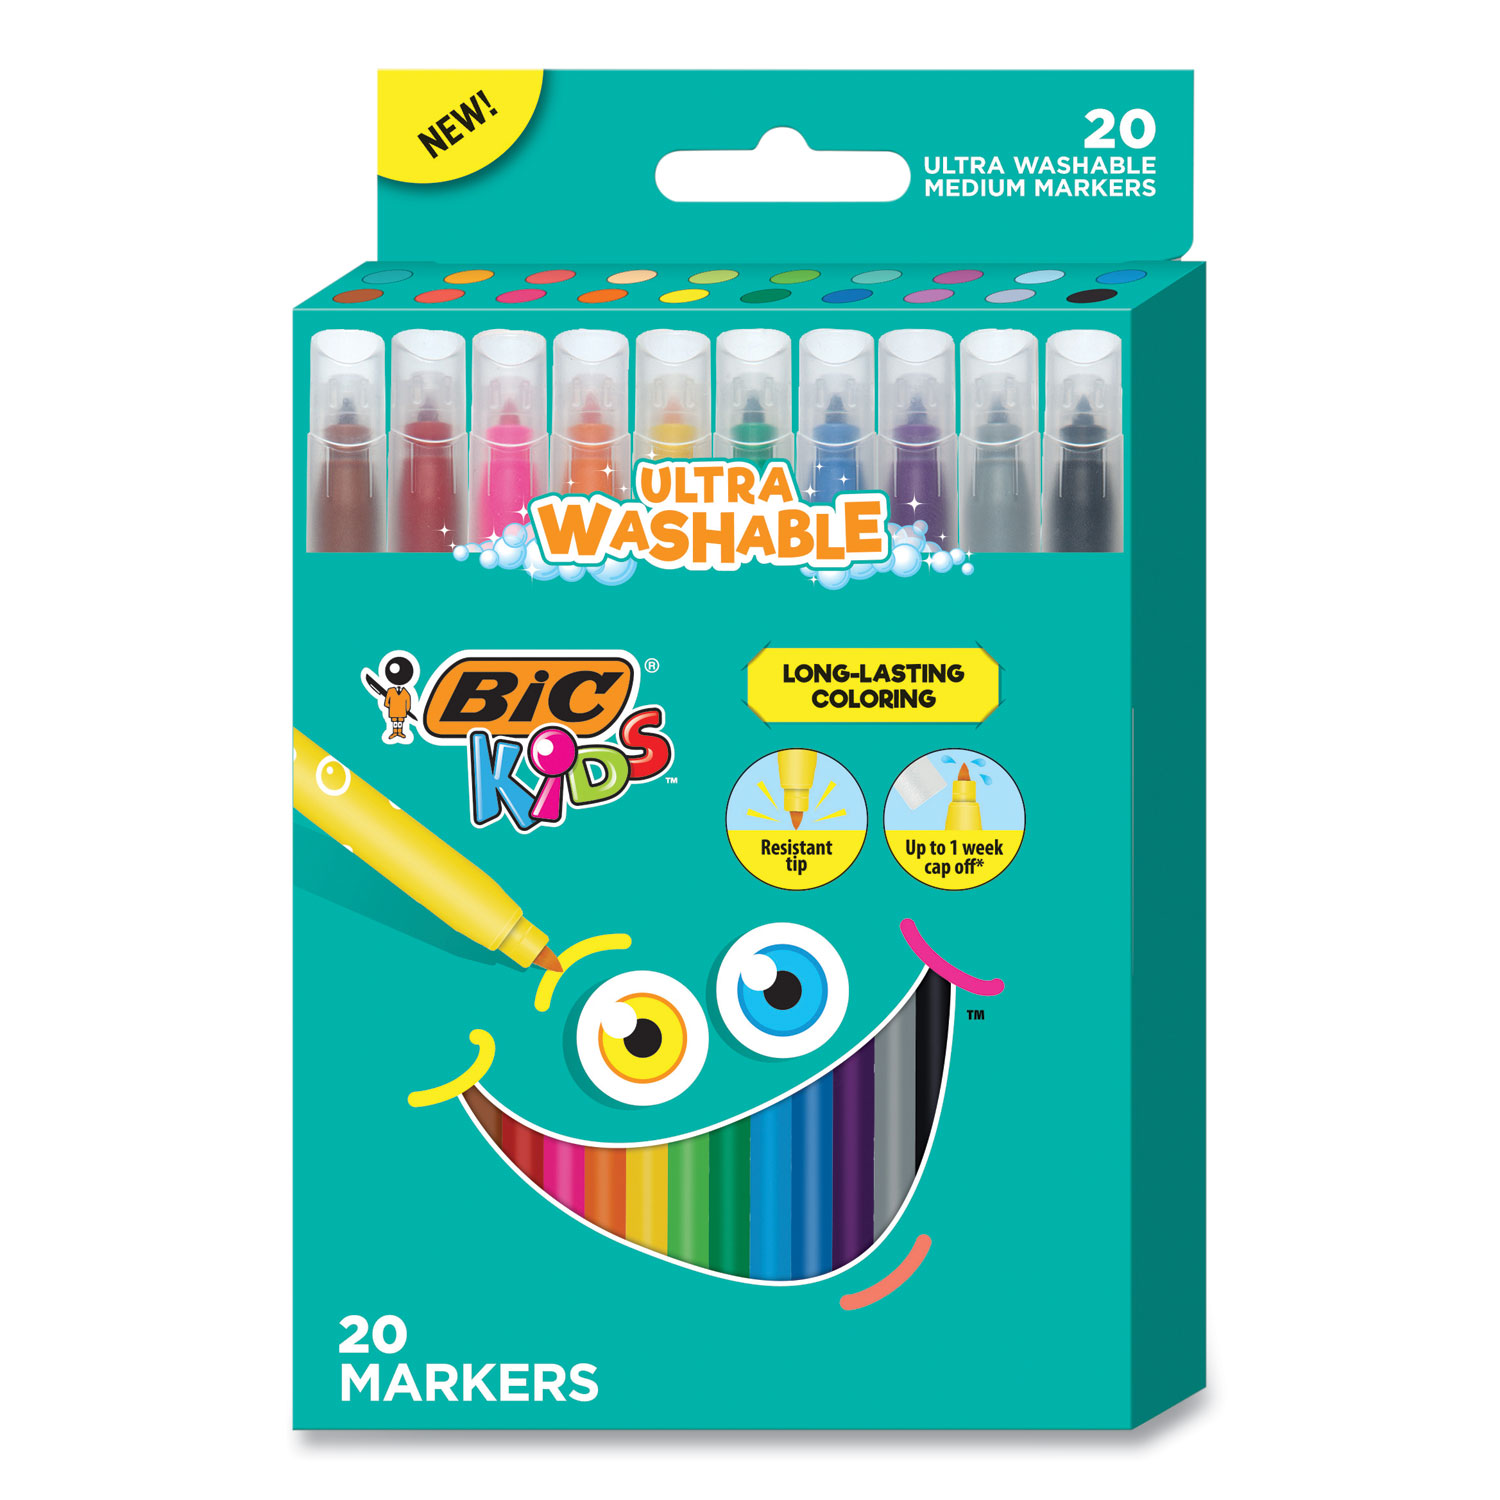 Cra-Z-Art Washable Mini Markers, 18 count